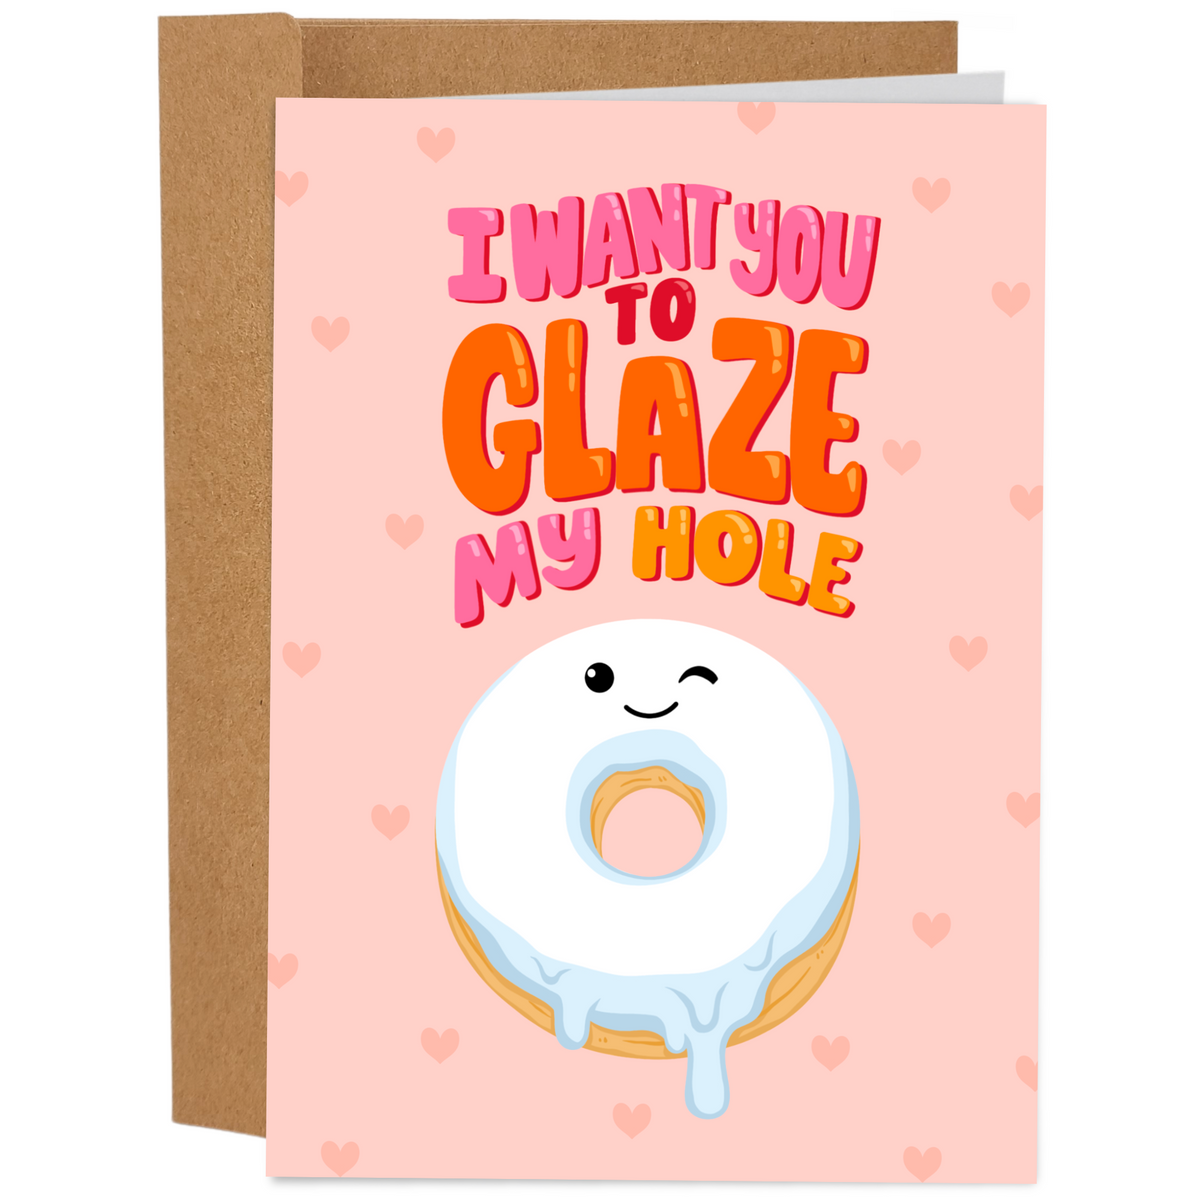 Dirty Donut Card For Husband - Glaze My Hole Card Sleazy Greetings